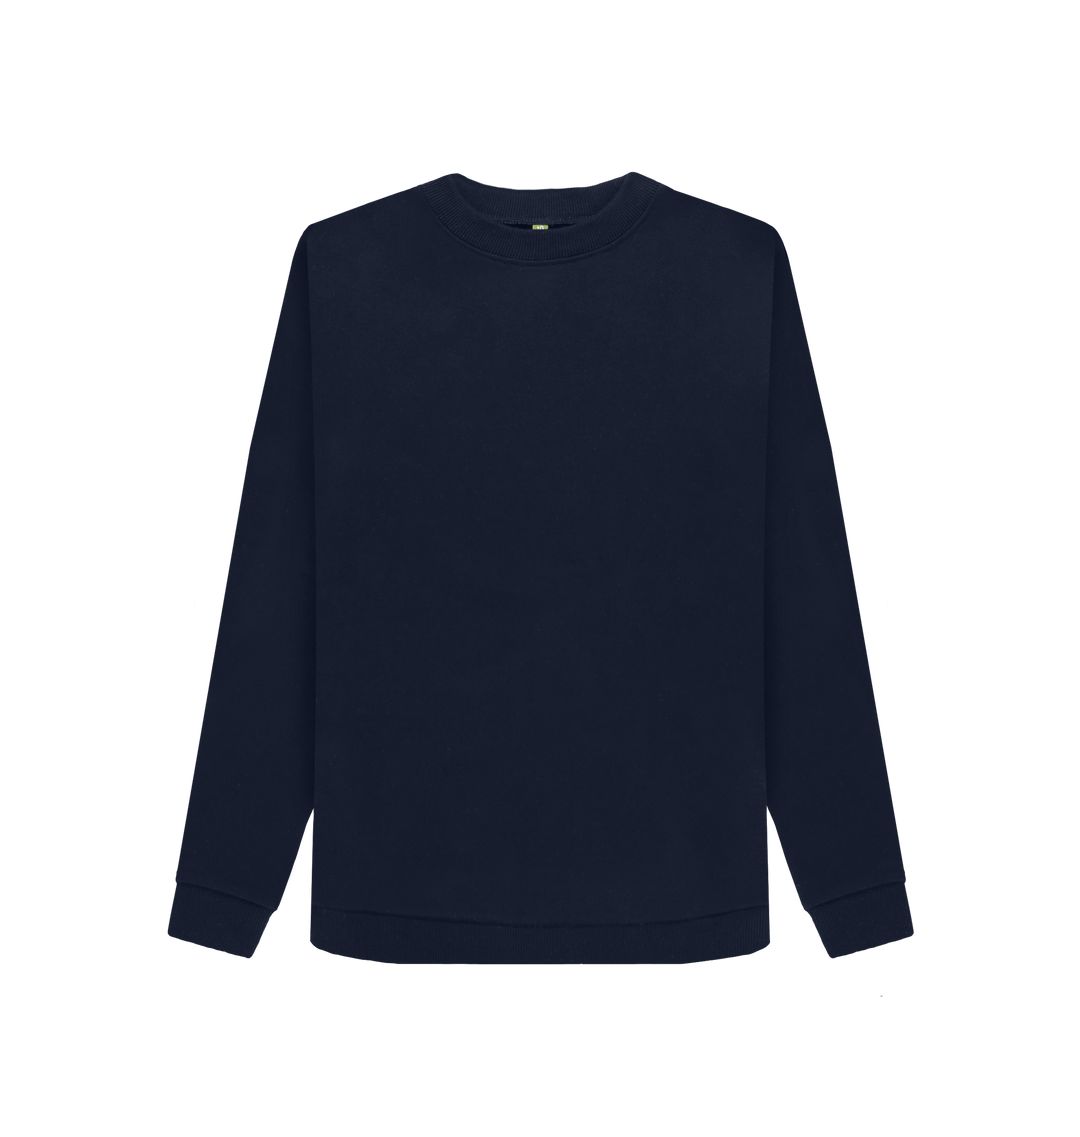 Navy Blue Women's organic cotton sweatshirt